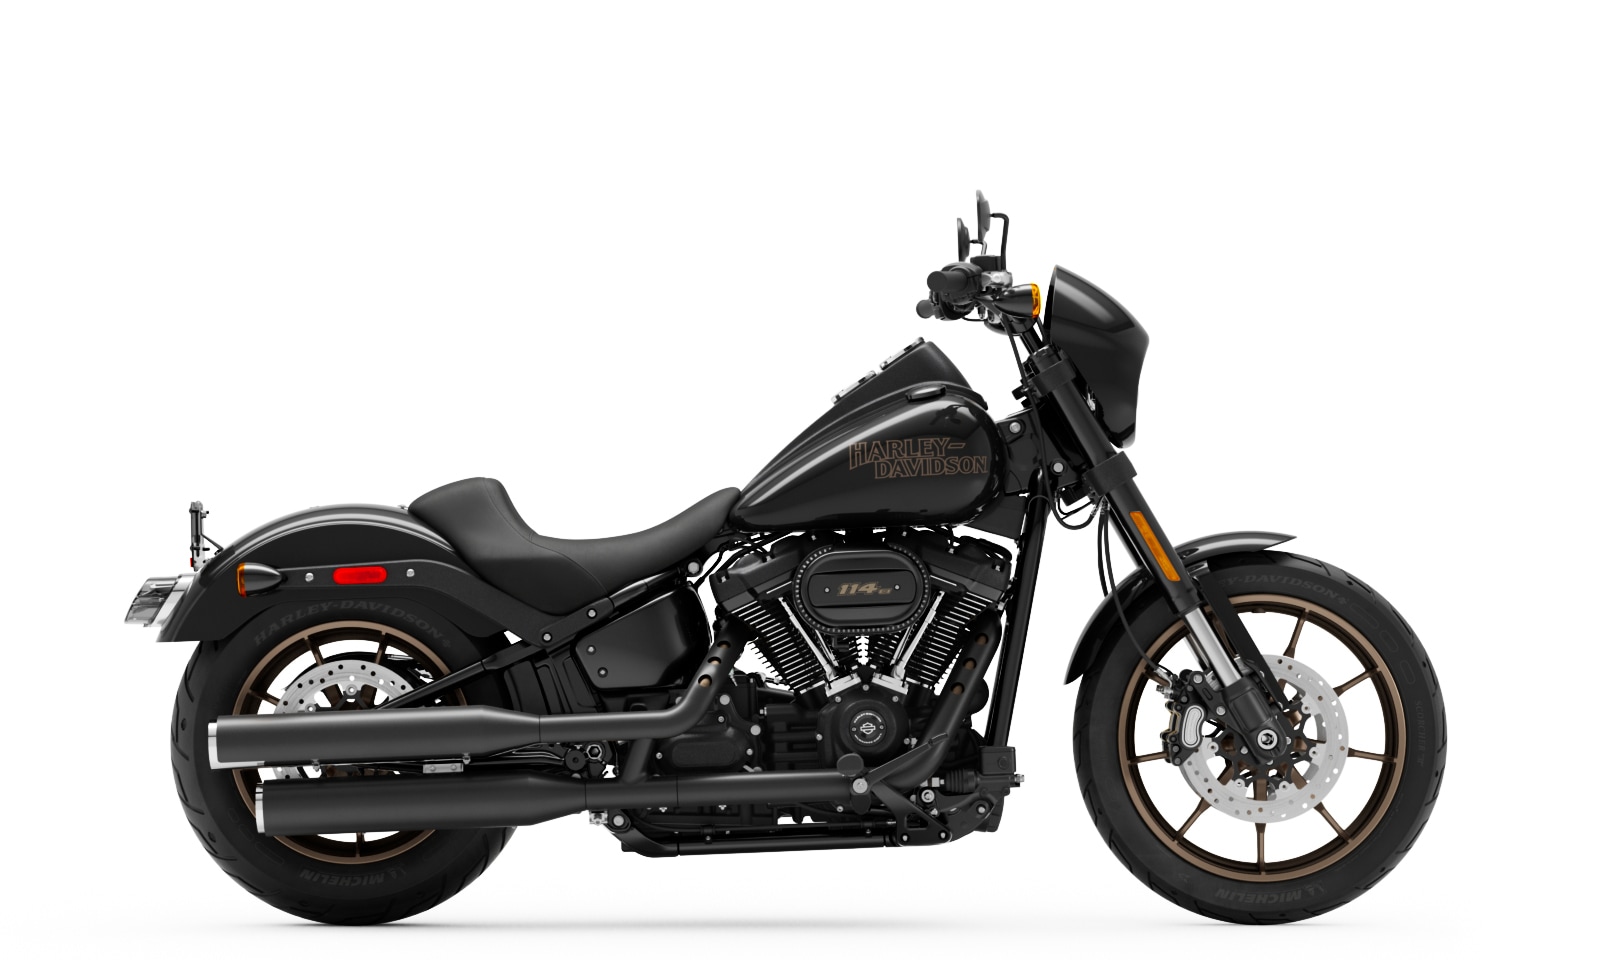 Harley Davidson Softail Low Rider S 2020 New Motorcycle At Thunderbike